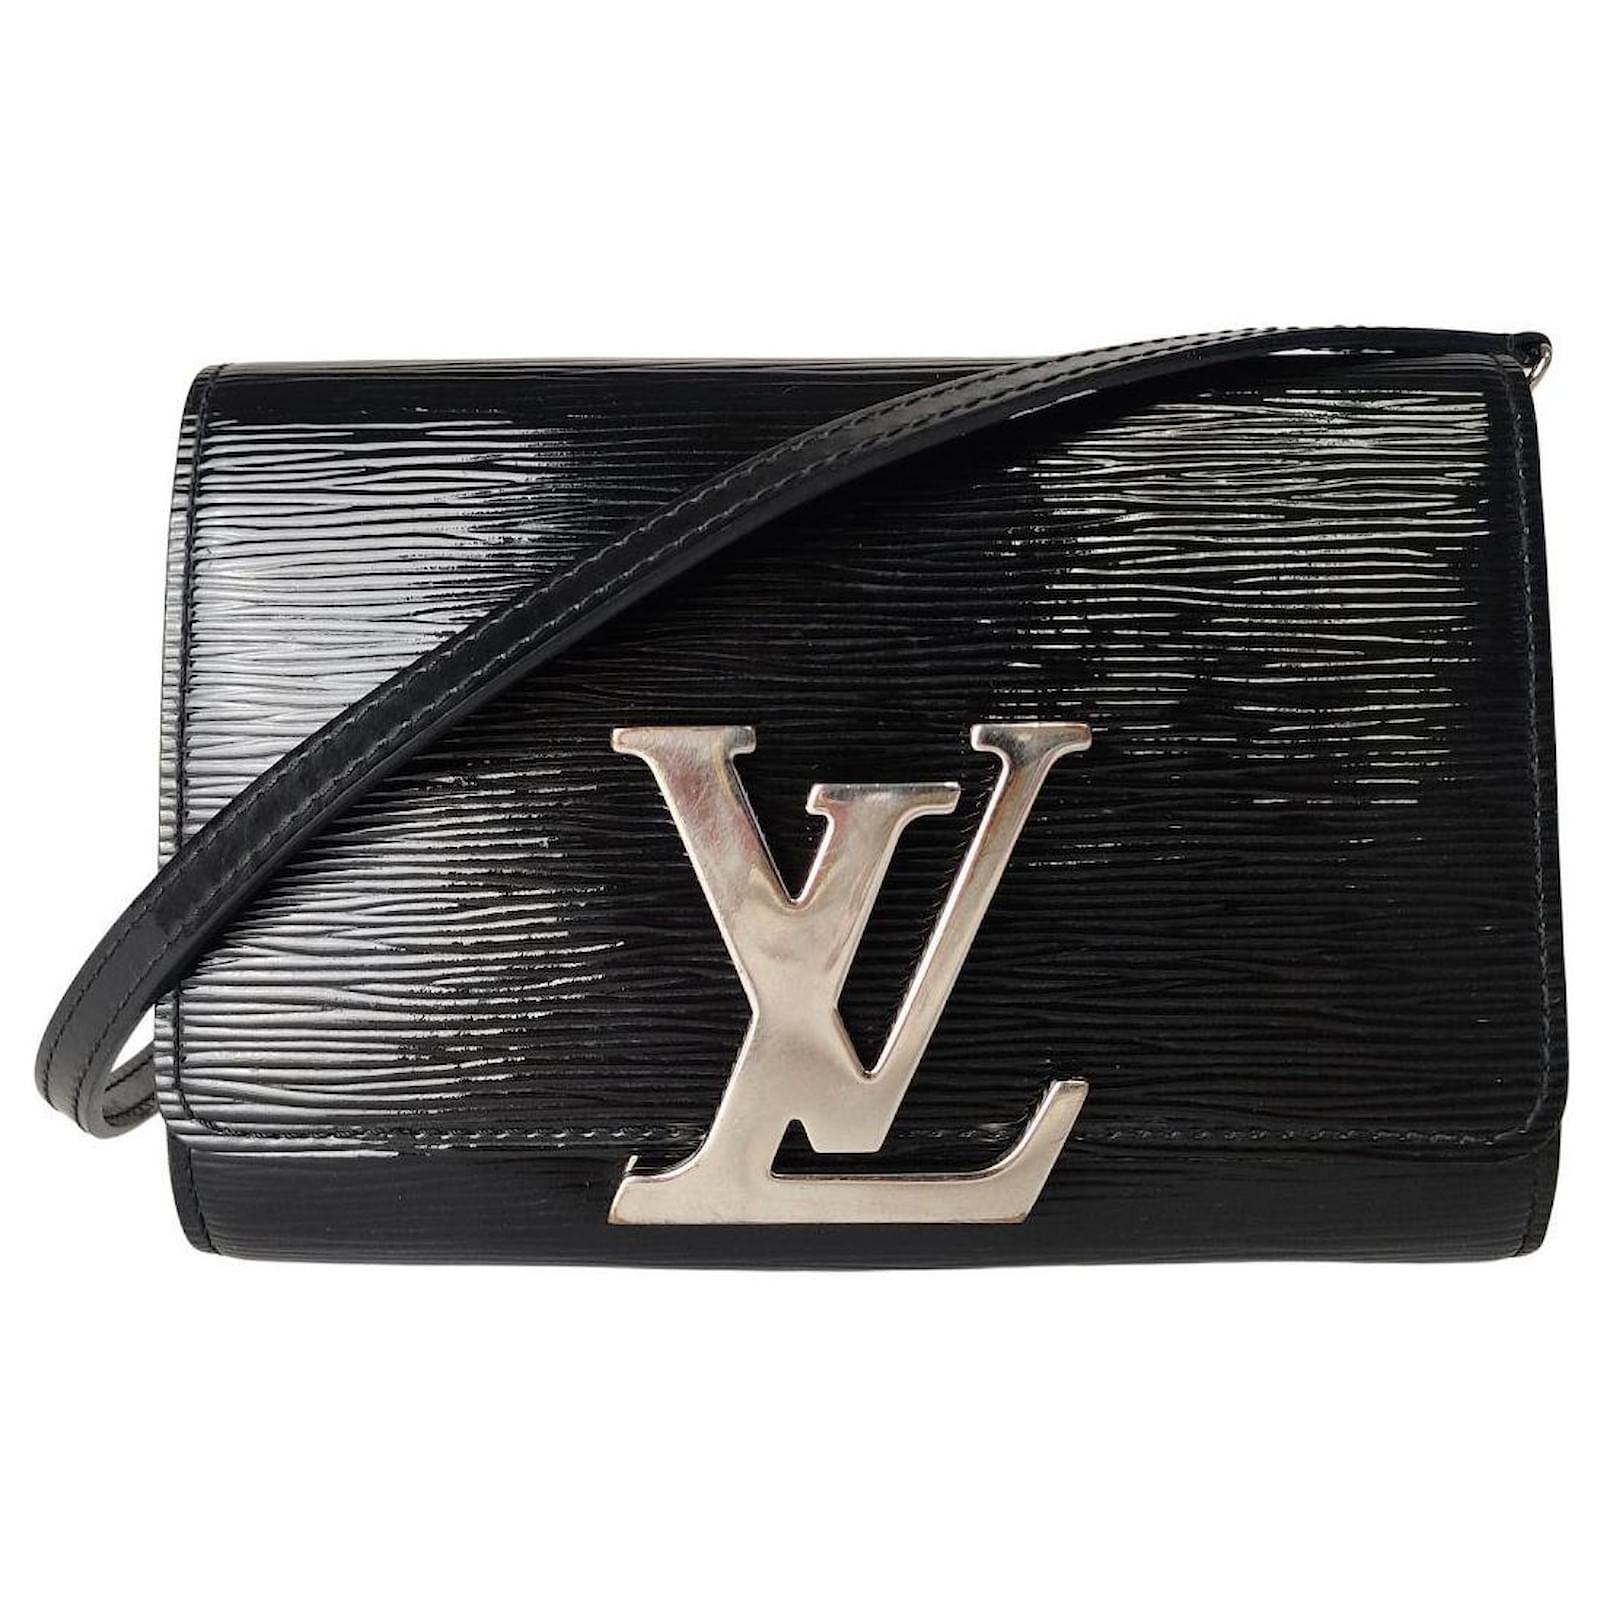 Louis Vuitton Patent Leather Wallet With Shoulder Strap